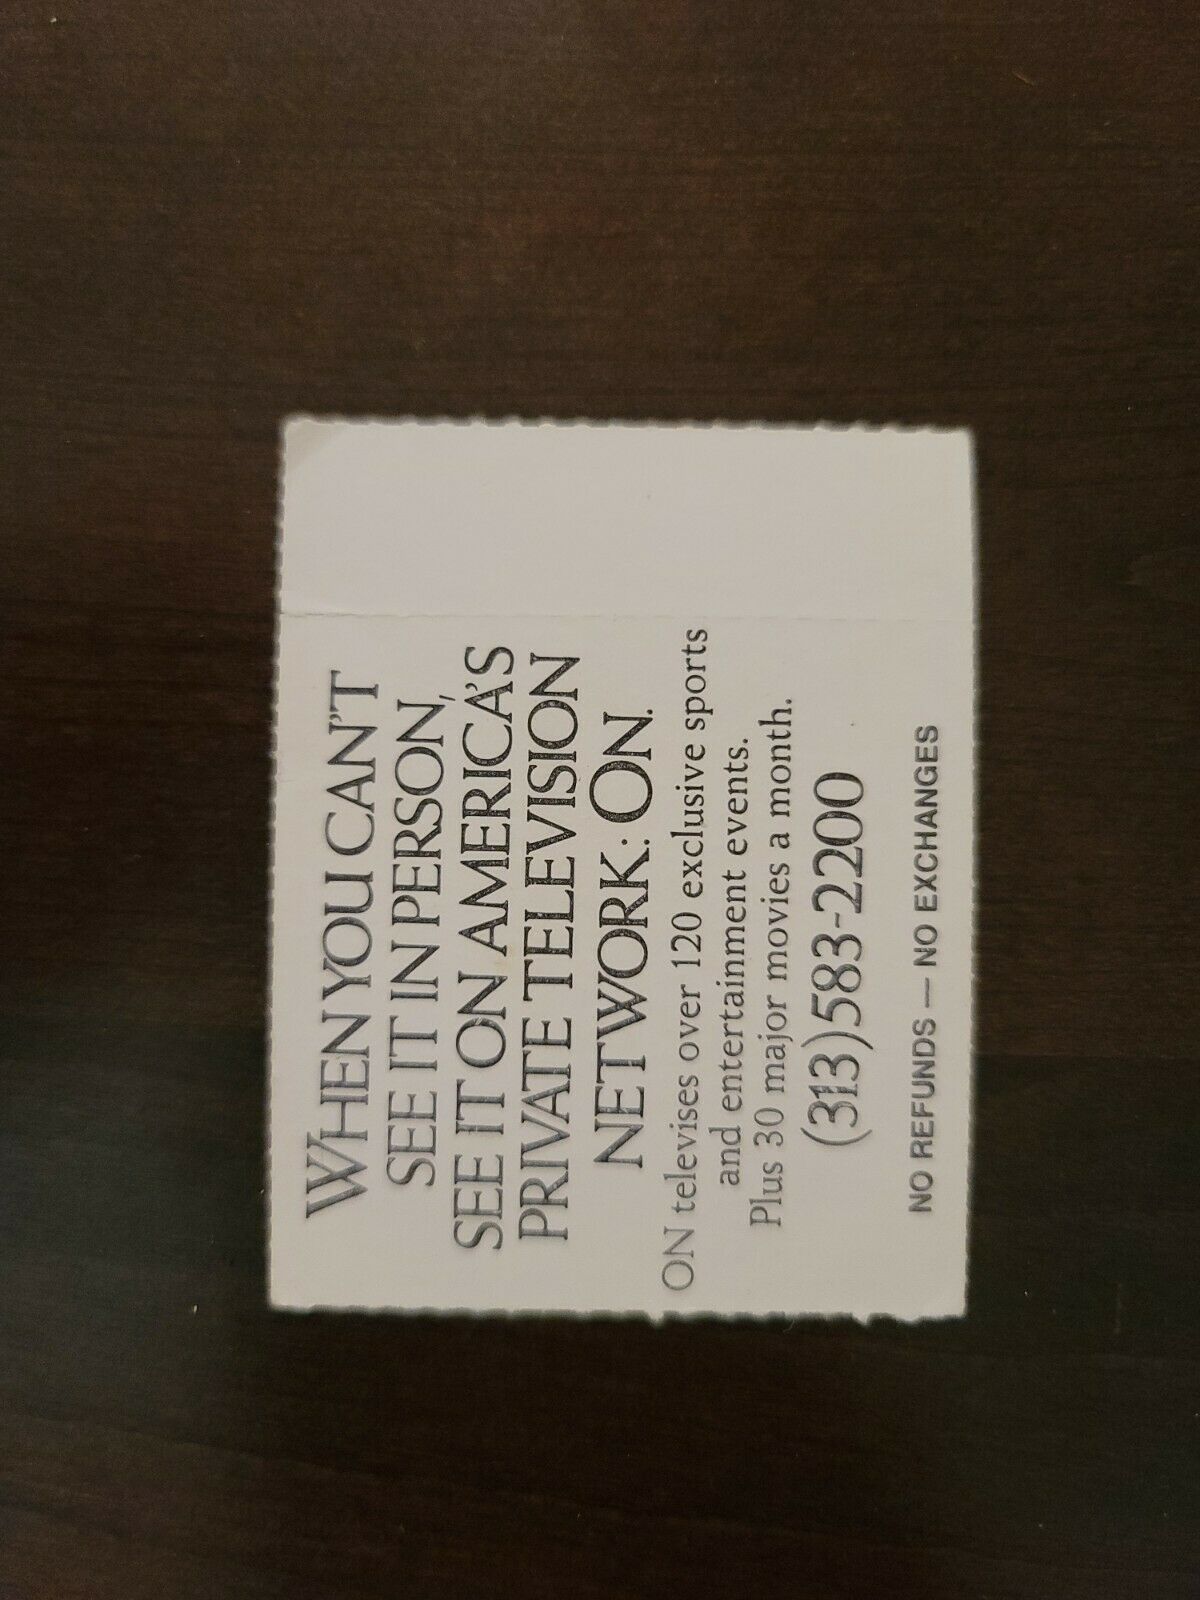 Frank Zappa 1980, Detroit Masonic Theater Original Concert Ticket Stub